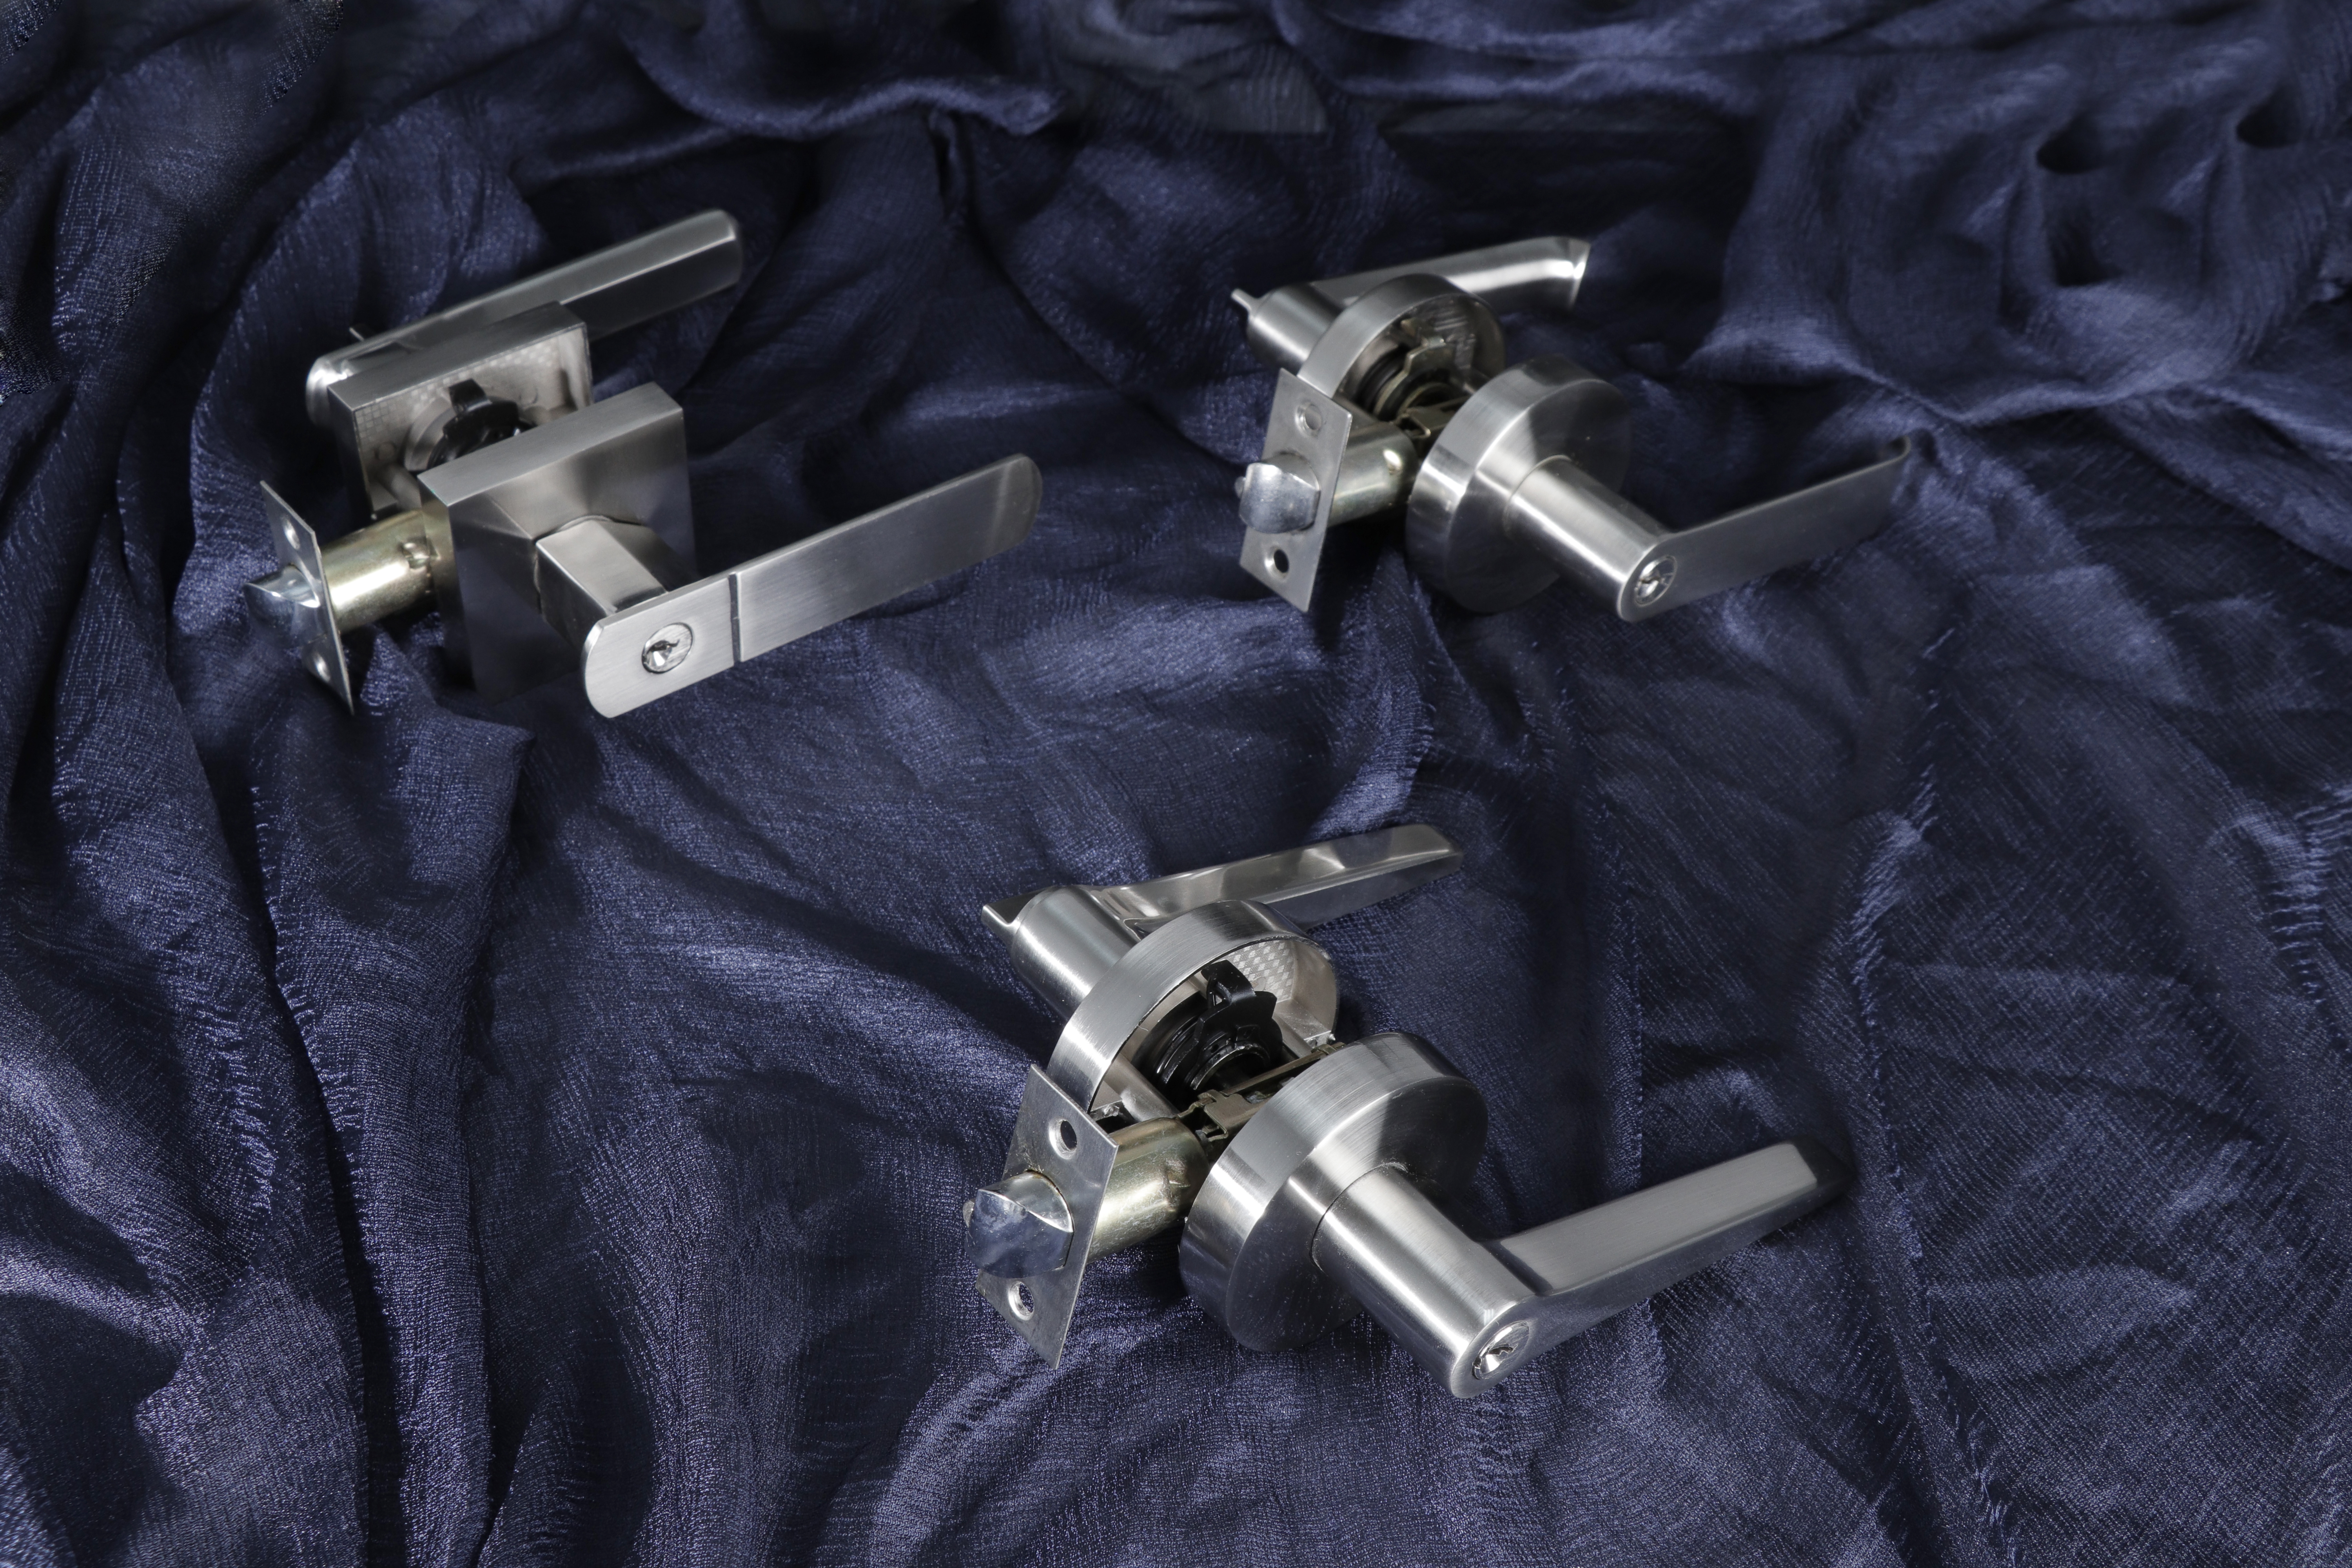 ANSI Standard Tubular Hebel Lock 6-Serie Speziales Design für Standard-Röhrenhebelschlosse (6411SN-ET)